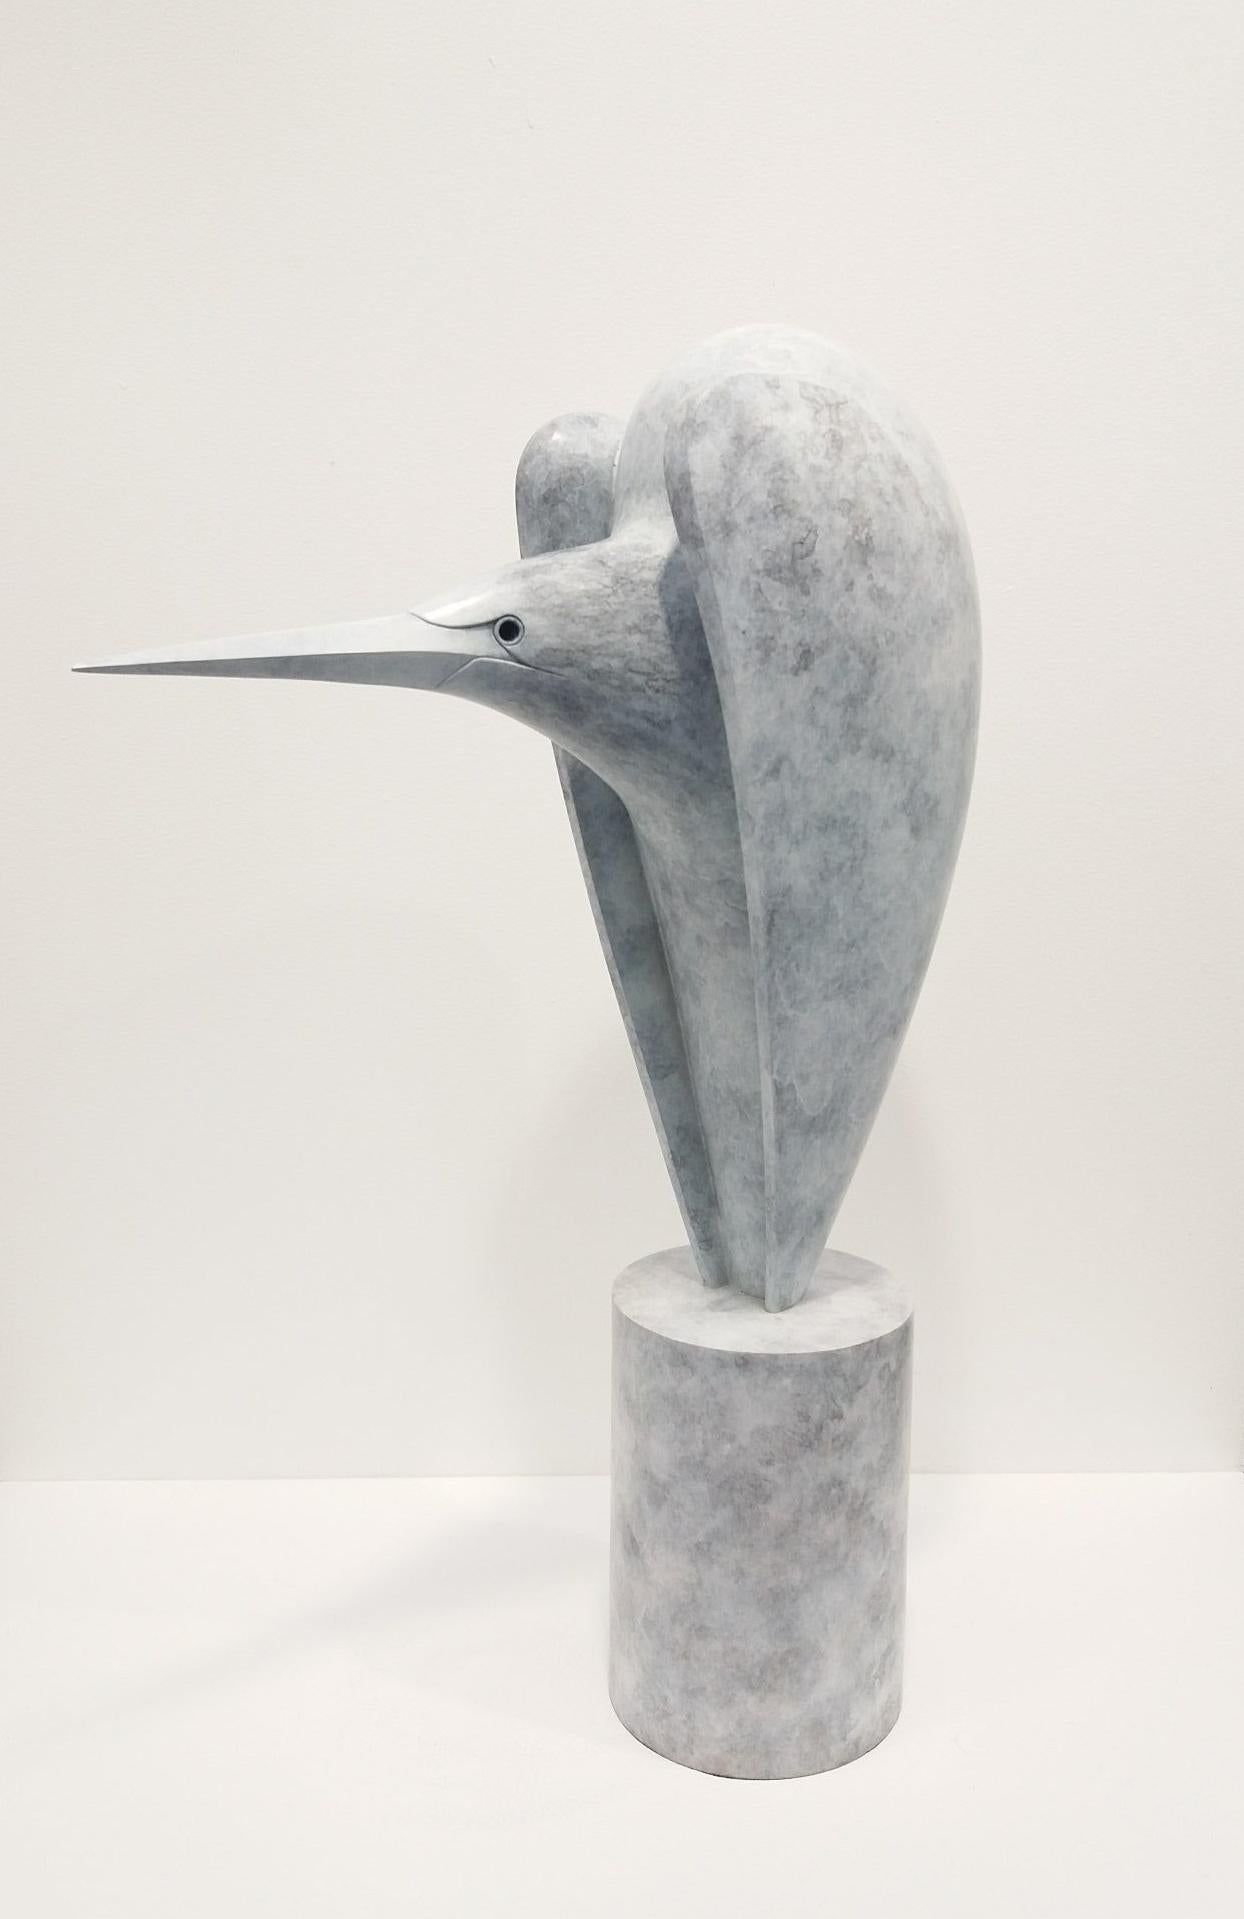 Anthony Theakston Figurative Sculpture - "Praedari" Contemporary Bronze Sculpture Portrait of a Praedari, Bird